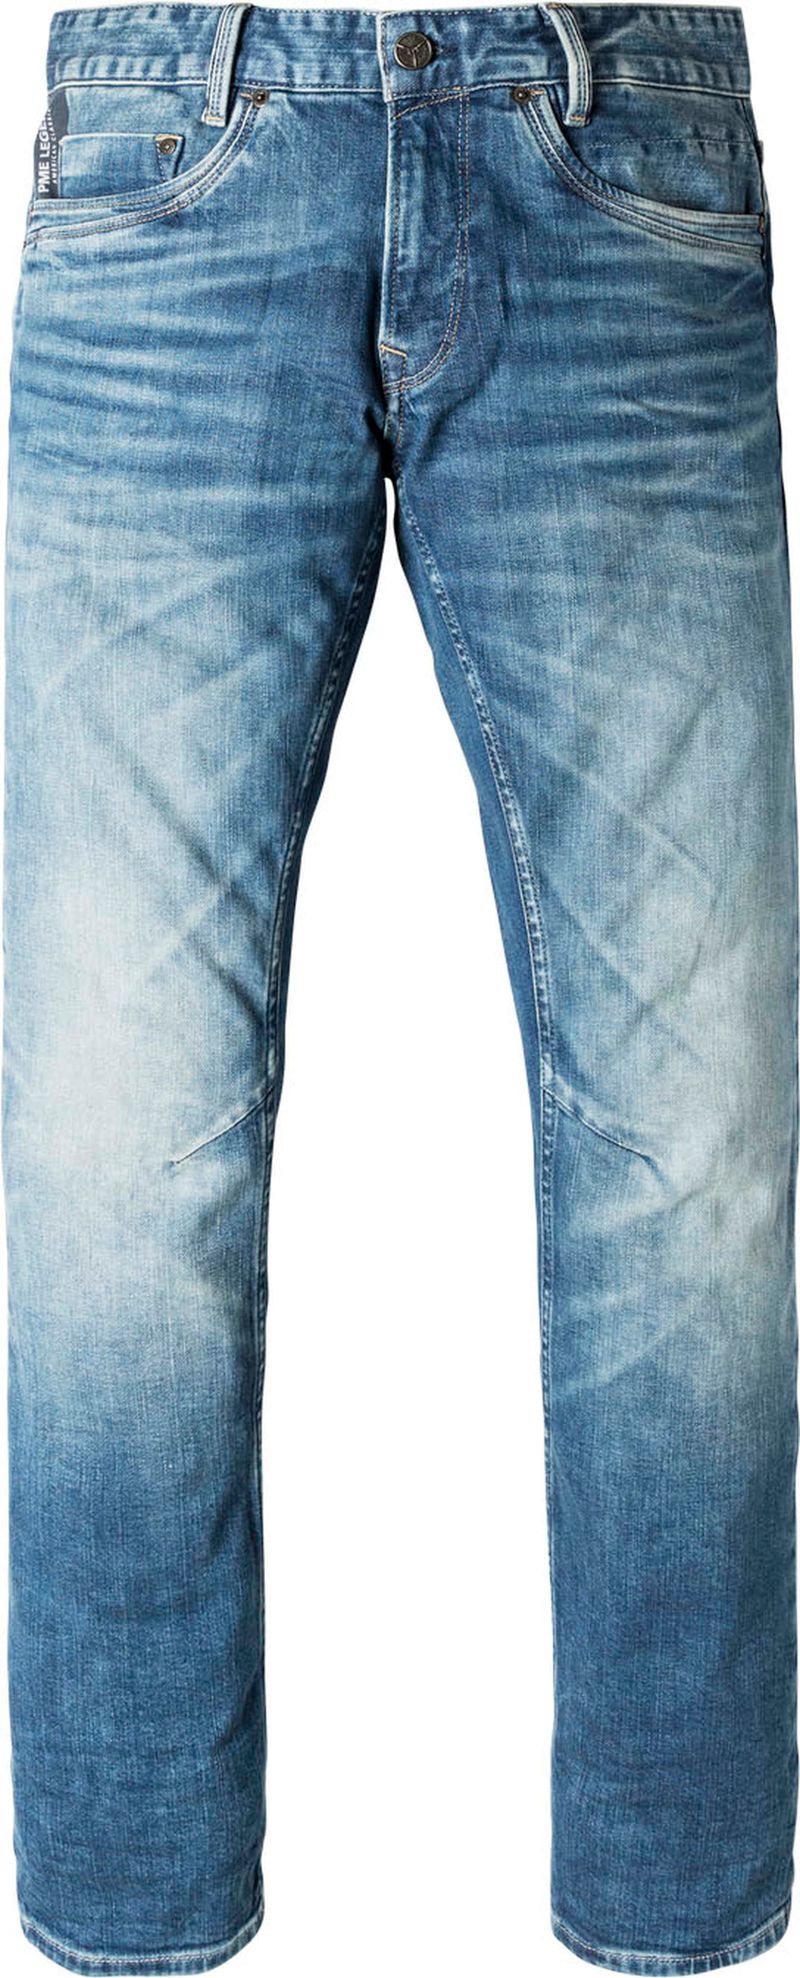 PME Legend Skymaster Jeans Blau - Größe W 33 - L 34 von PME Legend